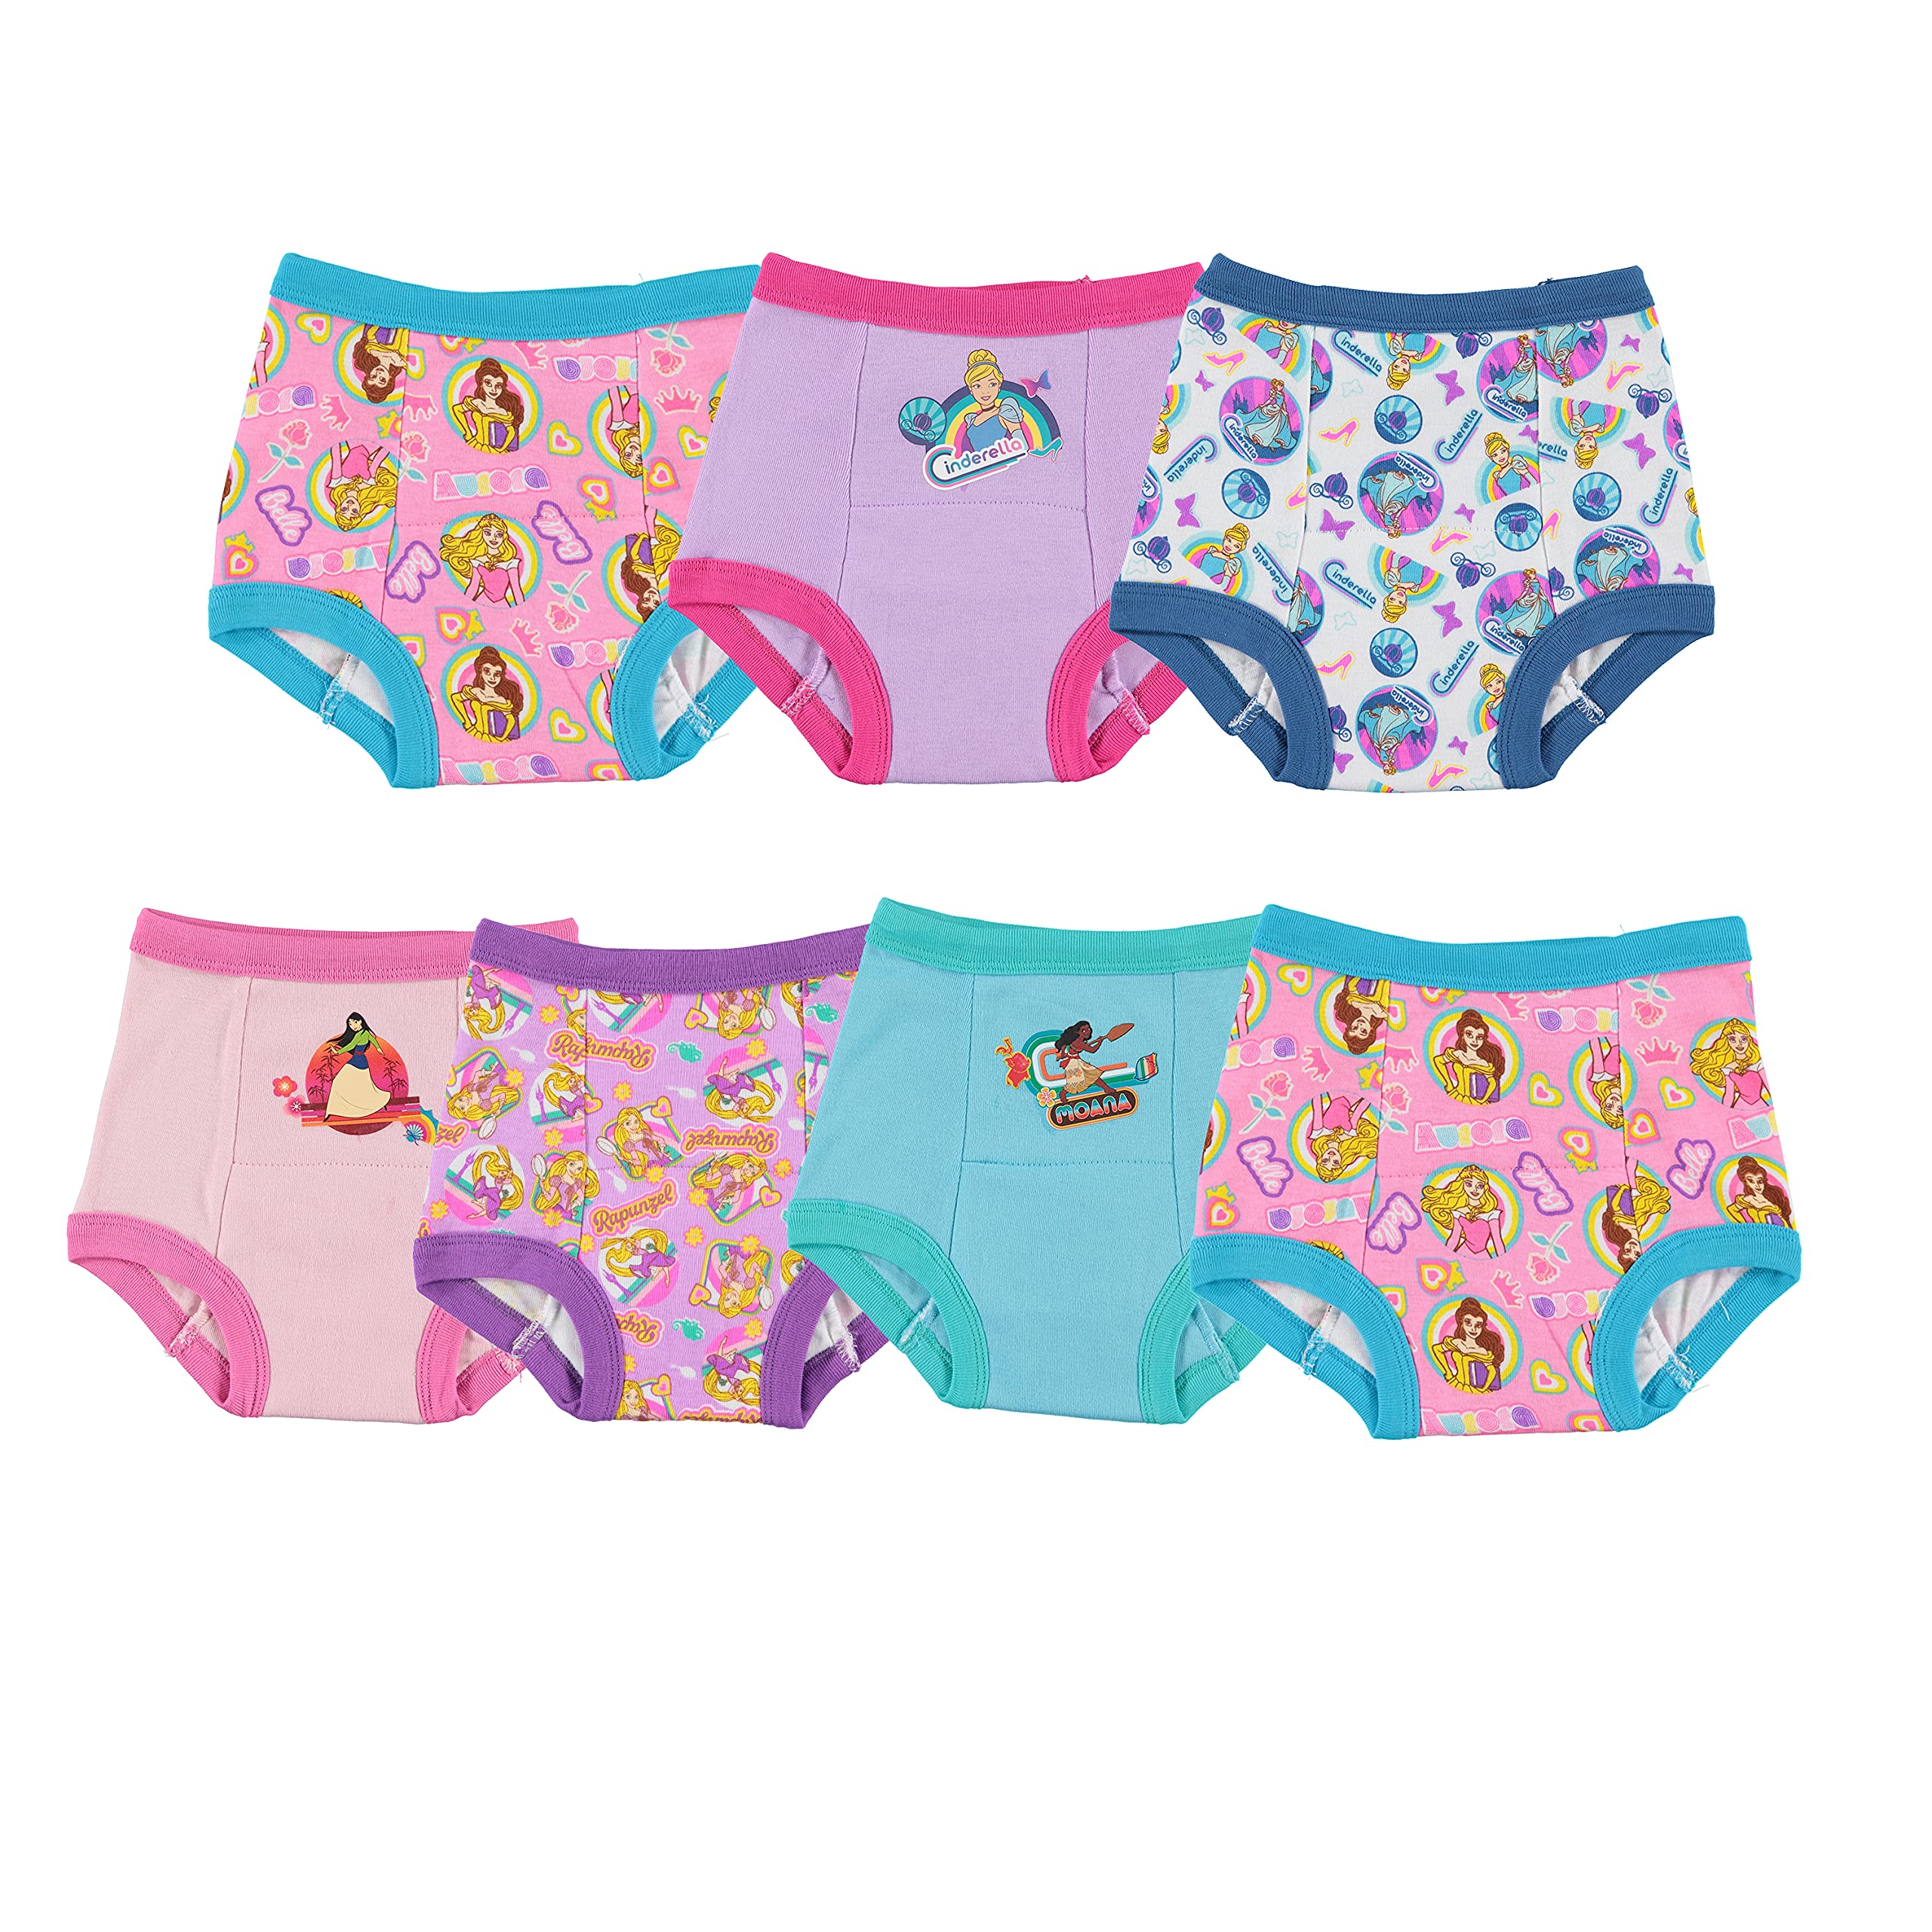 Disney Girls Princess Potty Training Pants Multipack Printraining7pk 3T